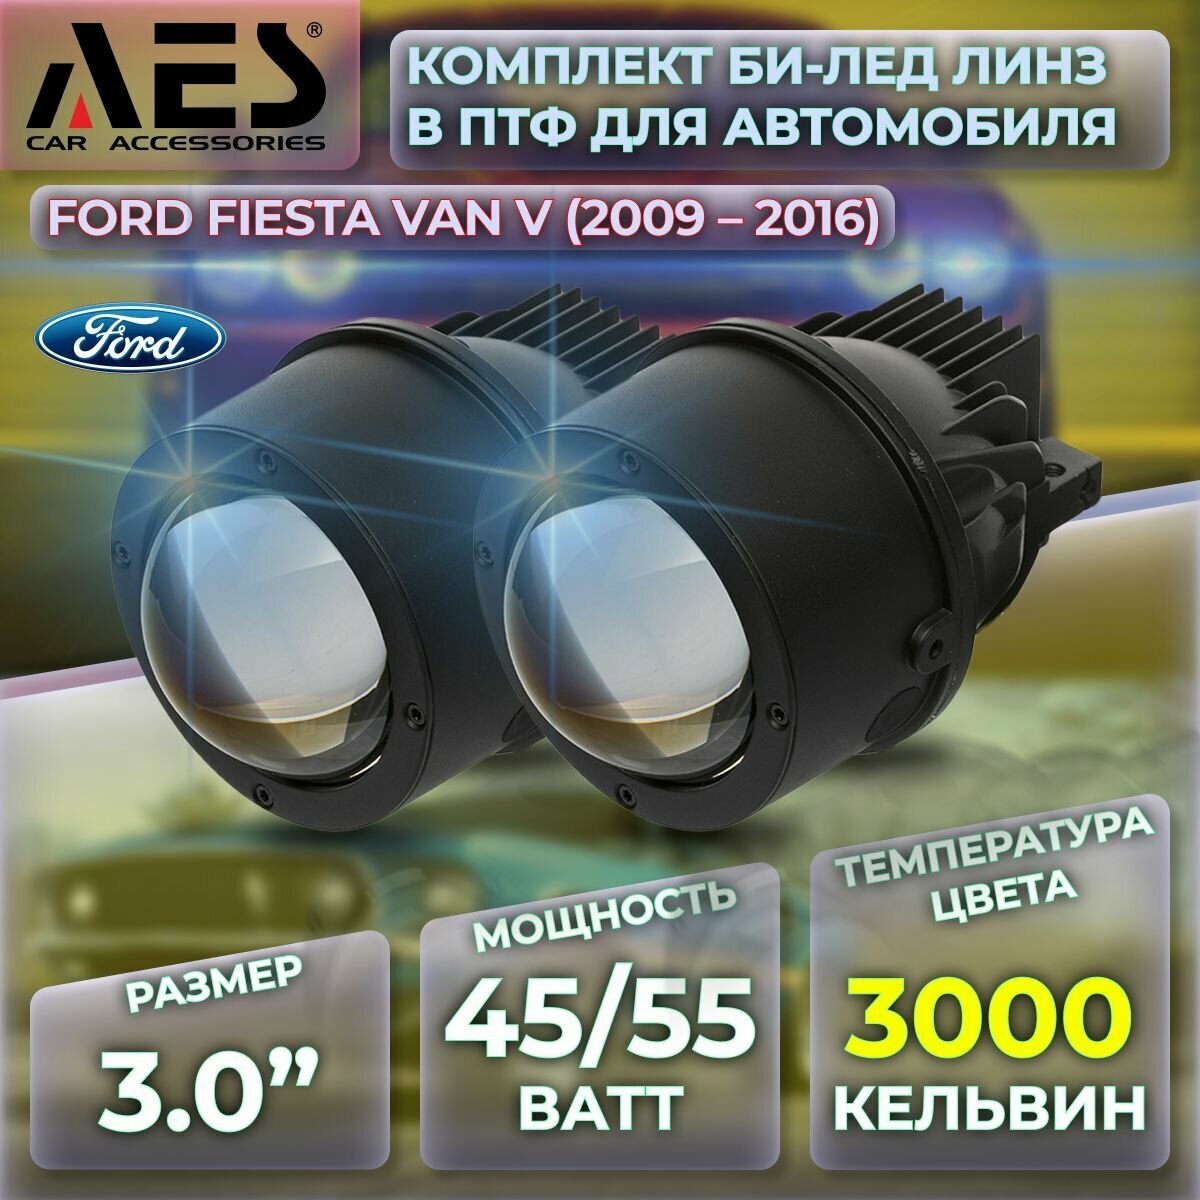 Комплект Би-лед линз в ПТФ для Ford Fiesta Van V (2009-2016) Q8 Foglight Bi-LED Laser 3000K (2 модуля 2 кронштейна)